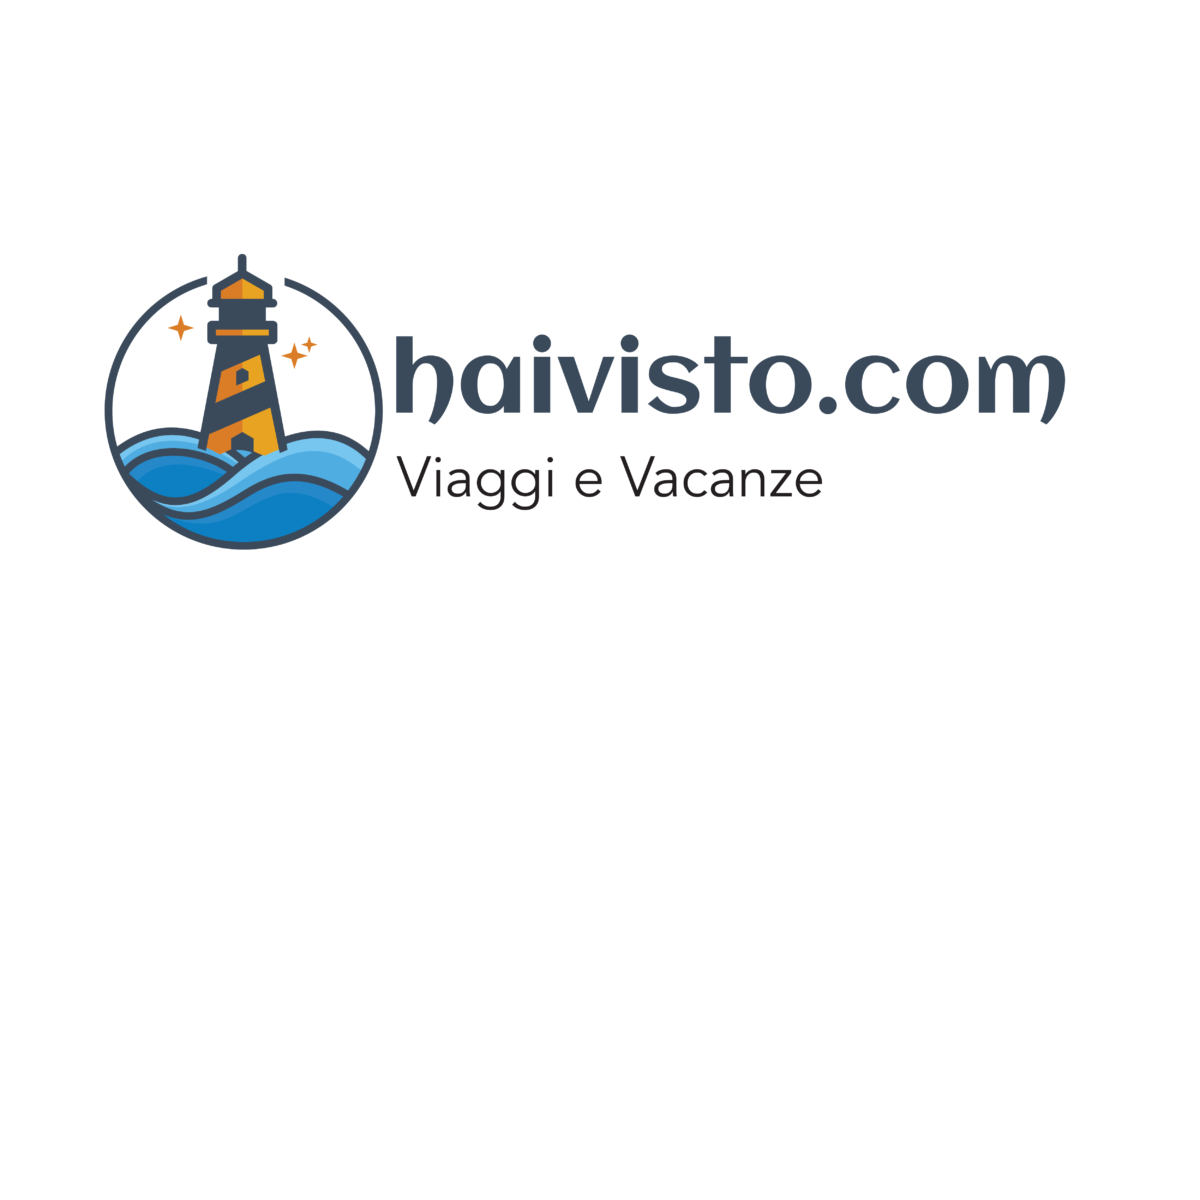 (c) Haivisto.com